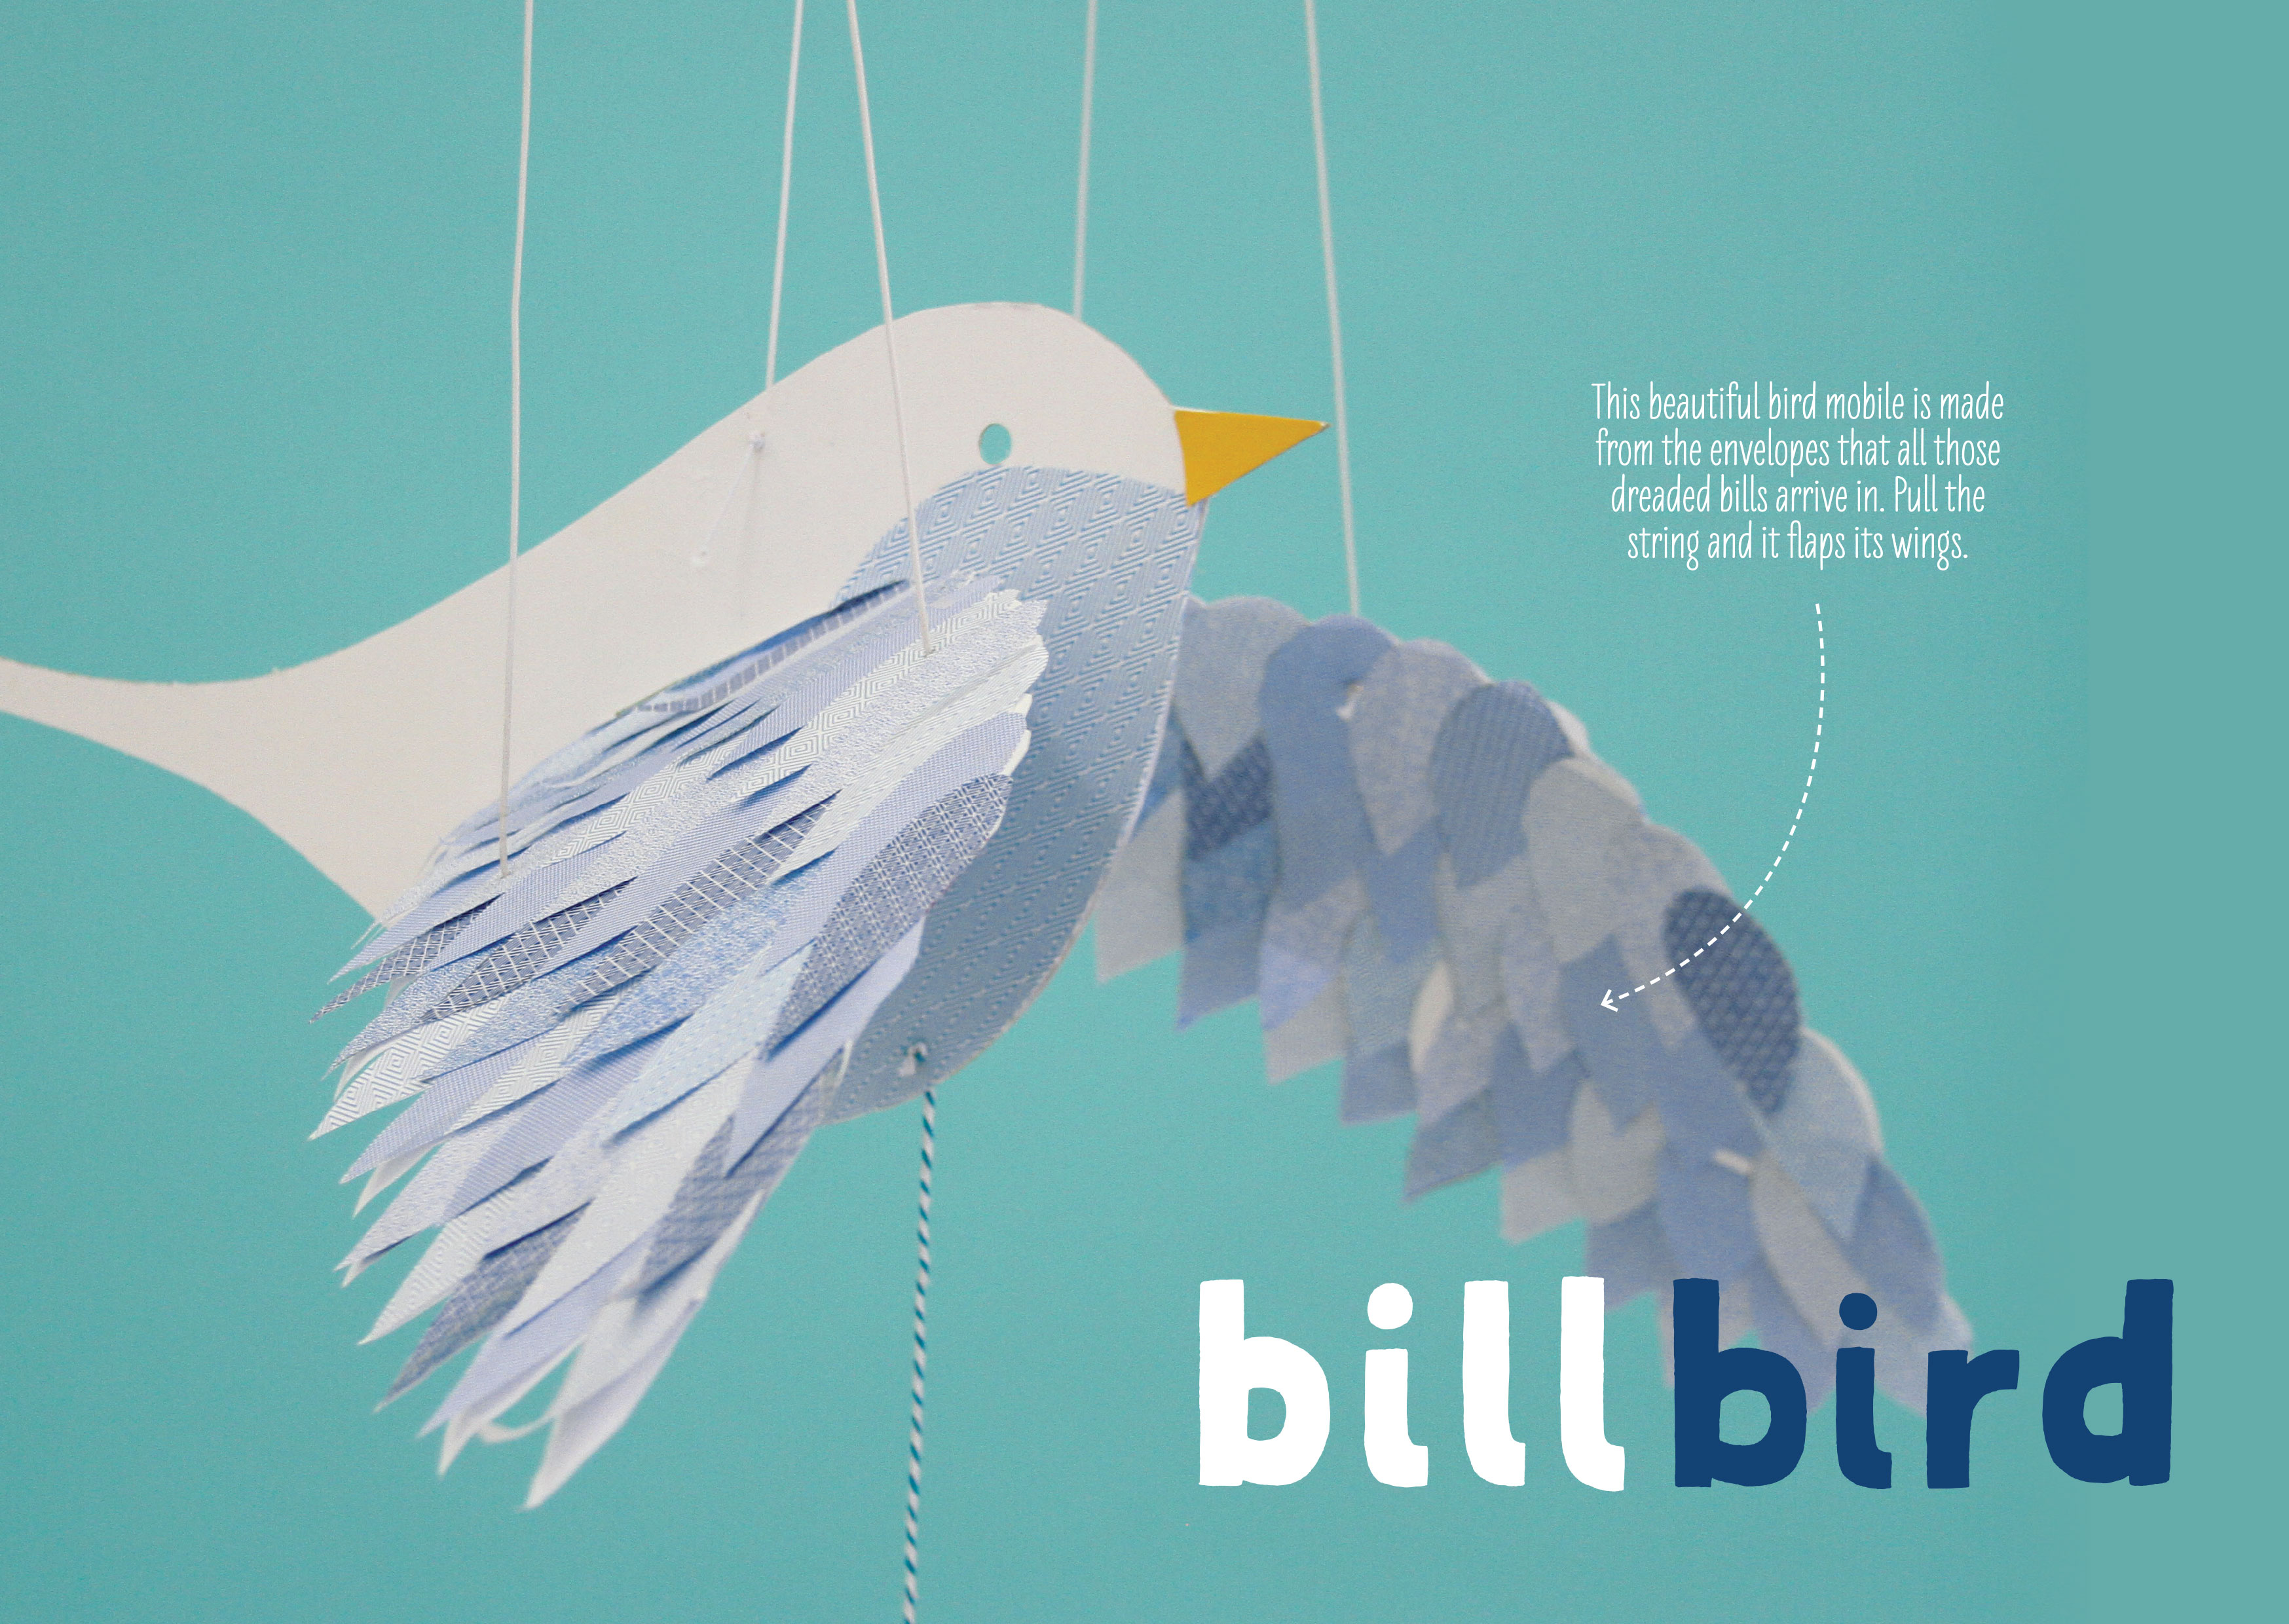 Lotta bill bird recycled craft